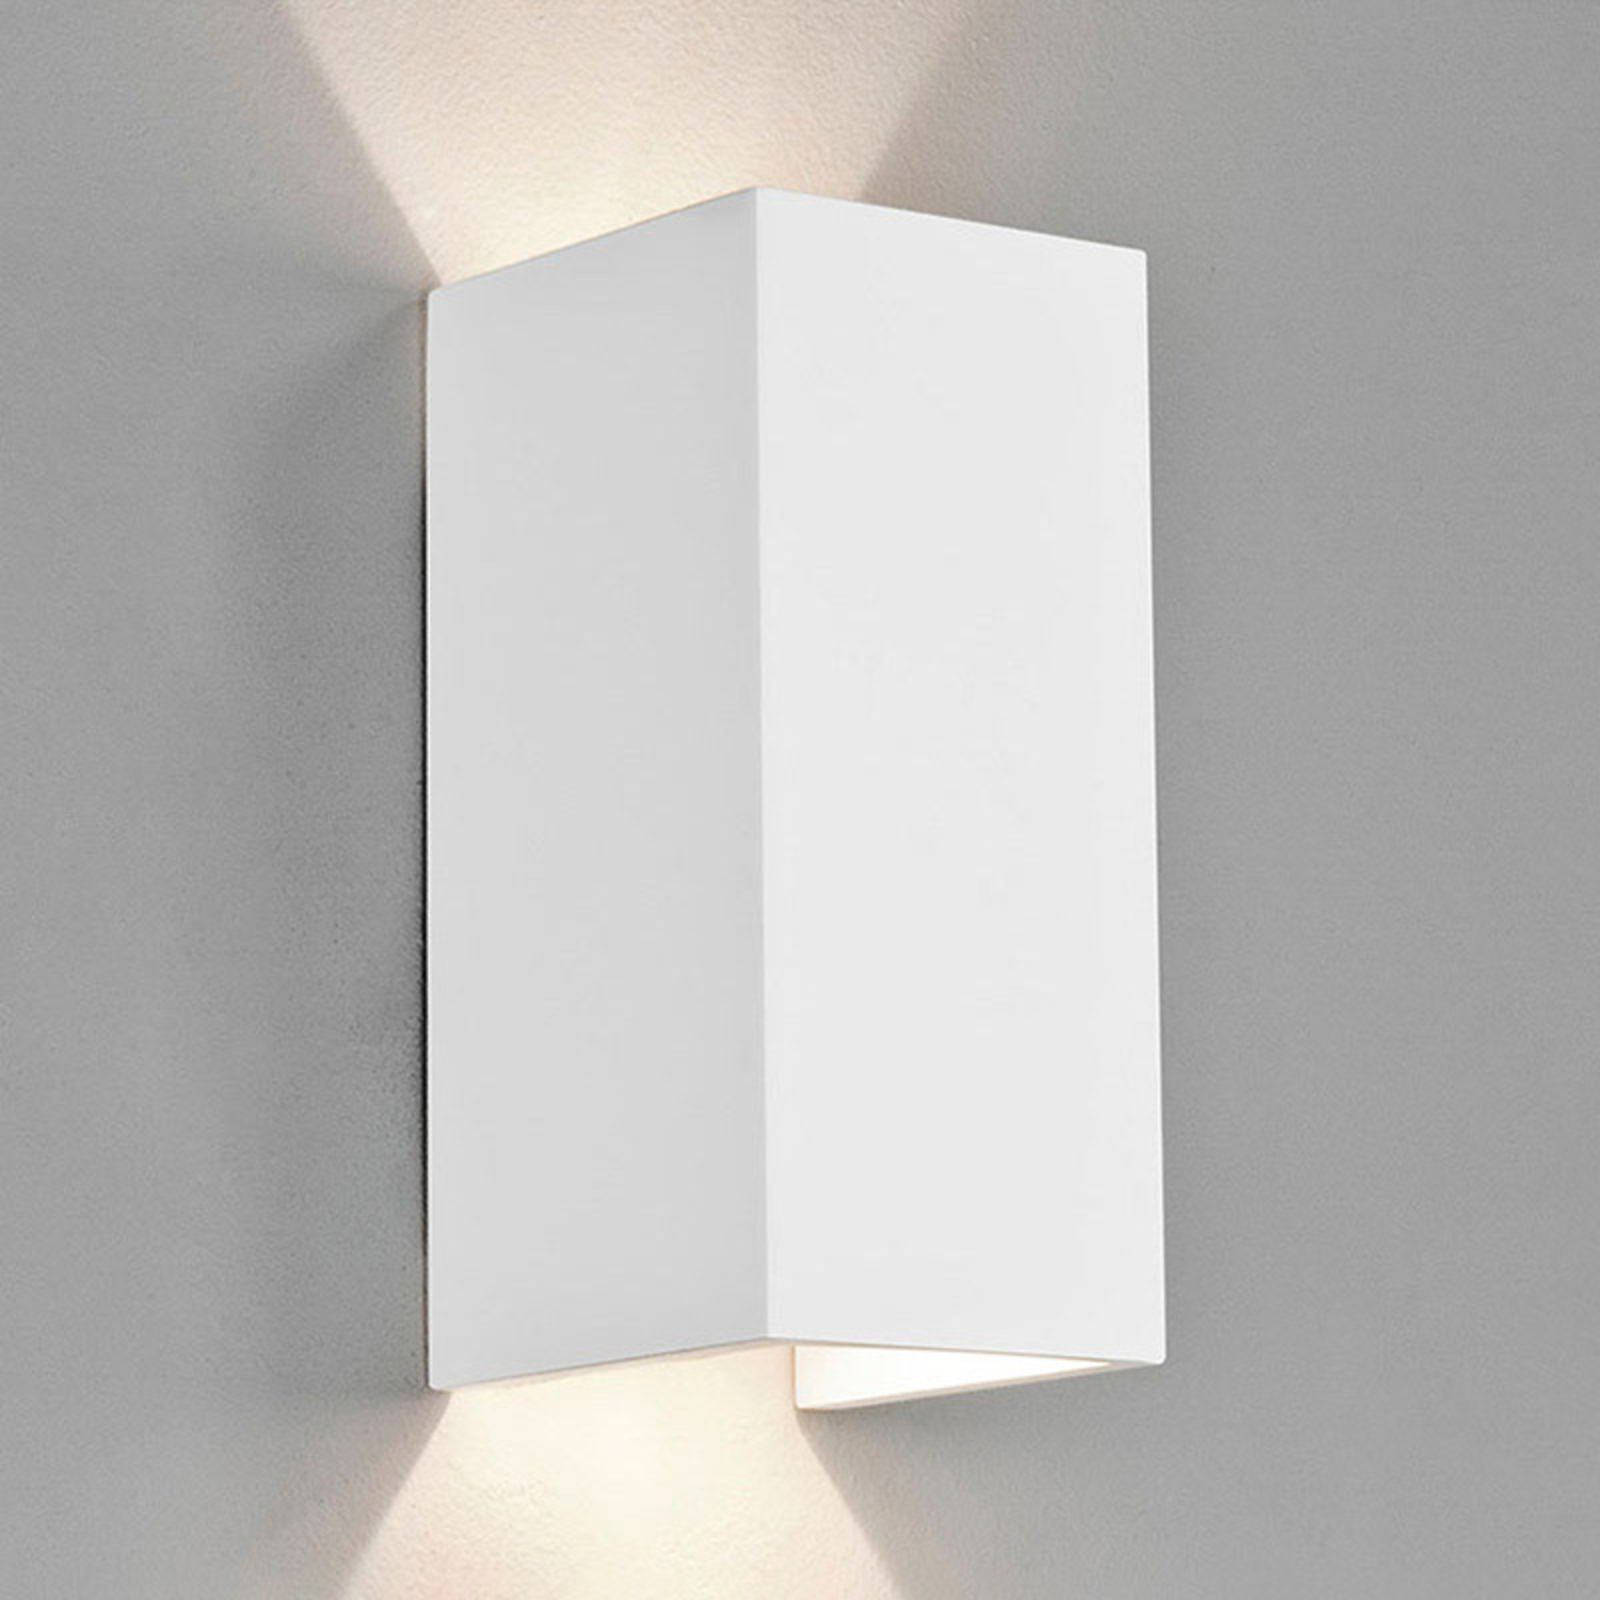 Astro Parma 210 LED wall light, plaster, 2,700 K